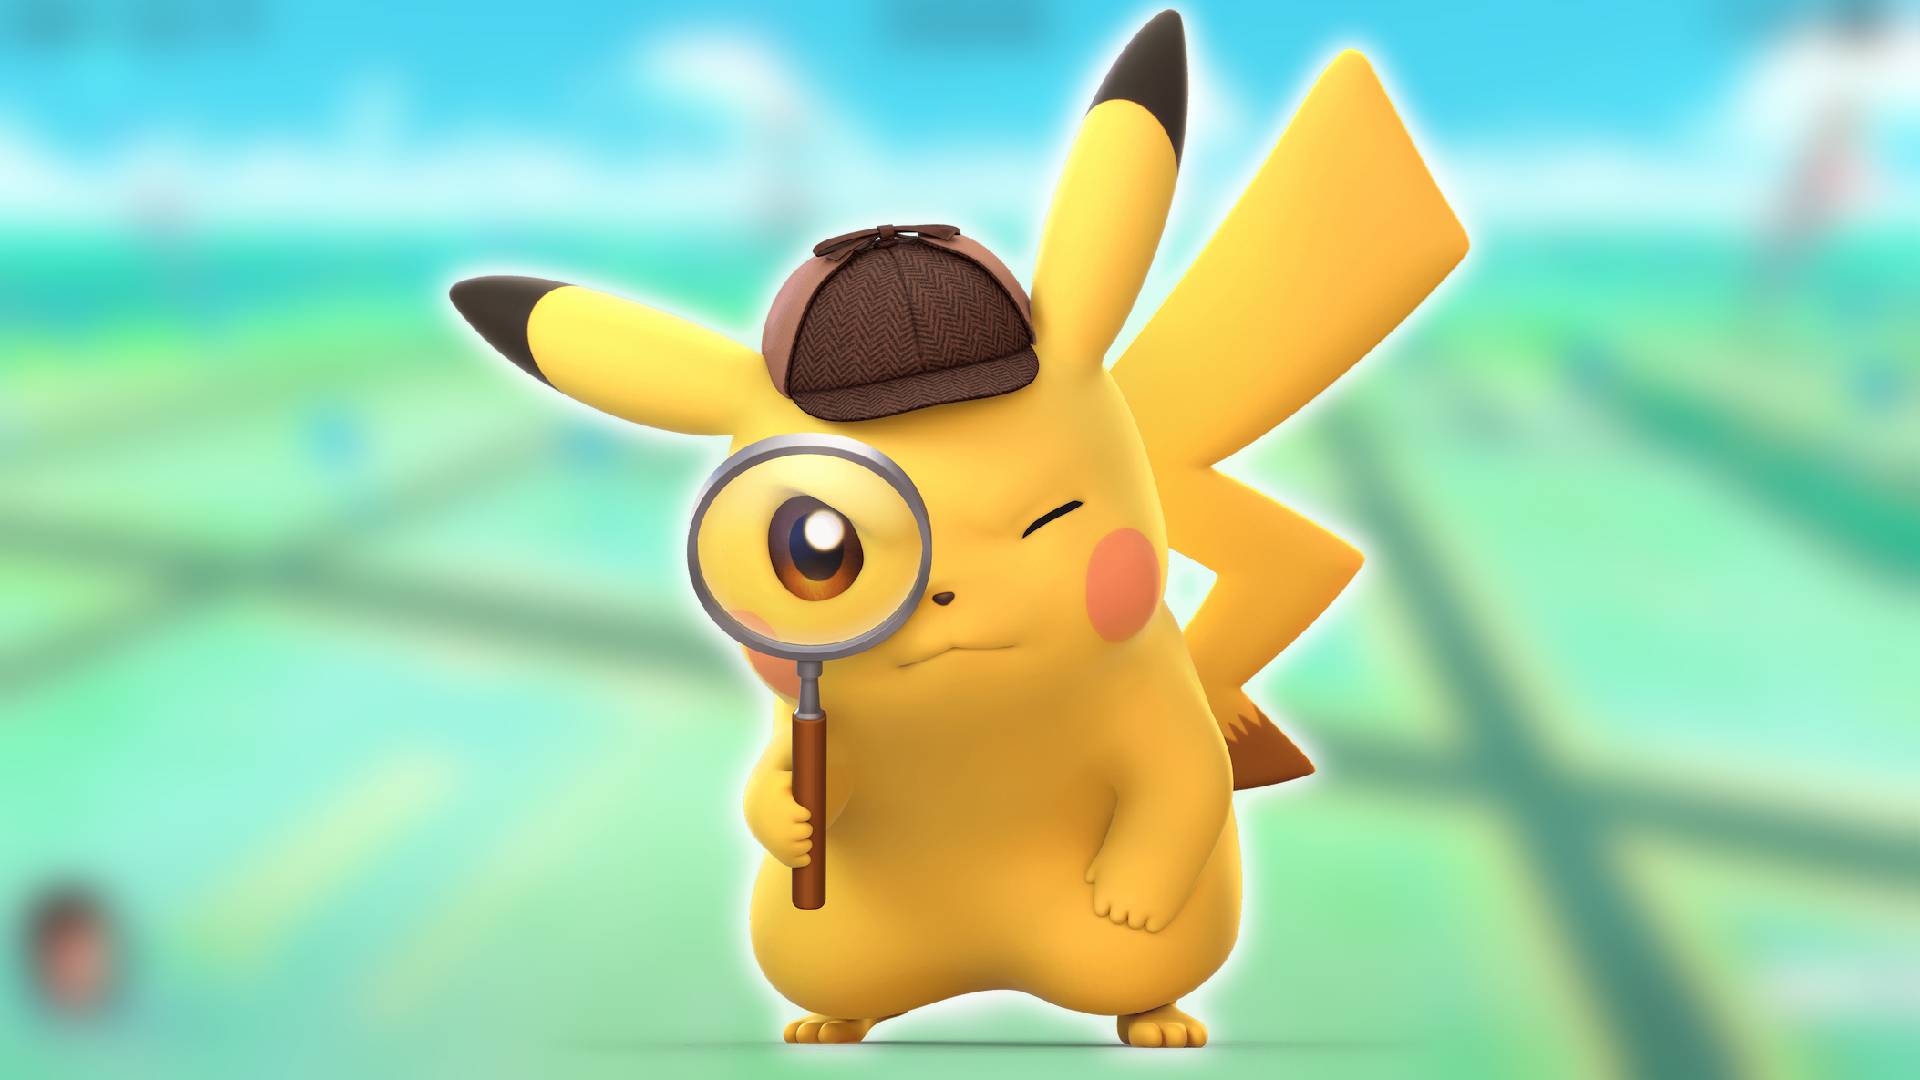 Pokemon GO: How To Get Shiny Pikachu and Shiny Raichu wearing a